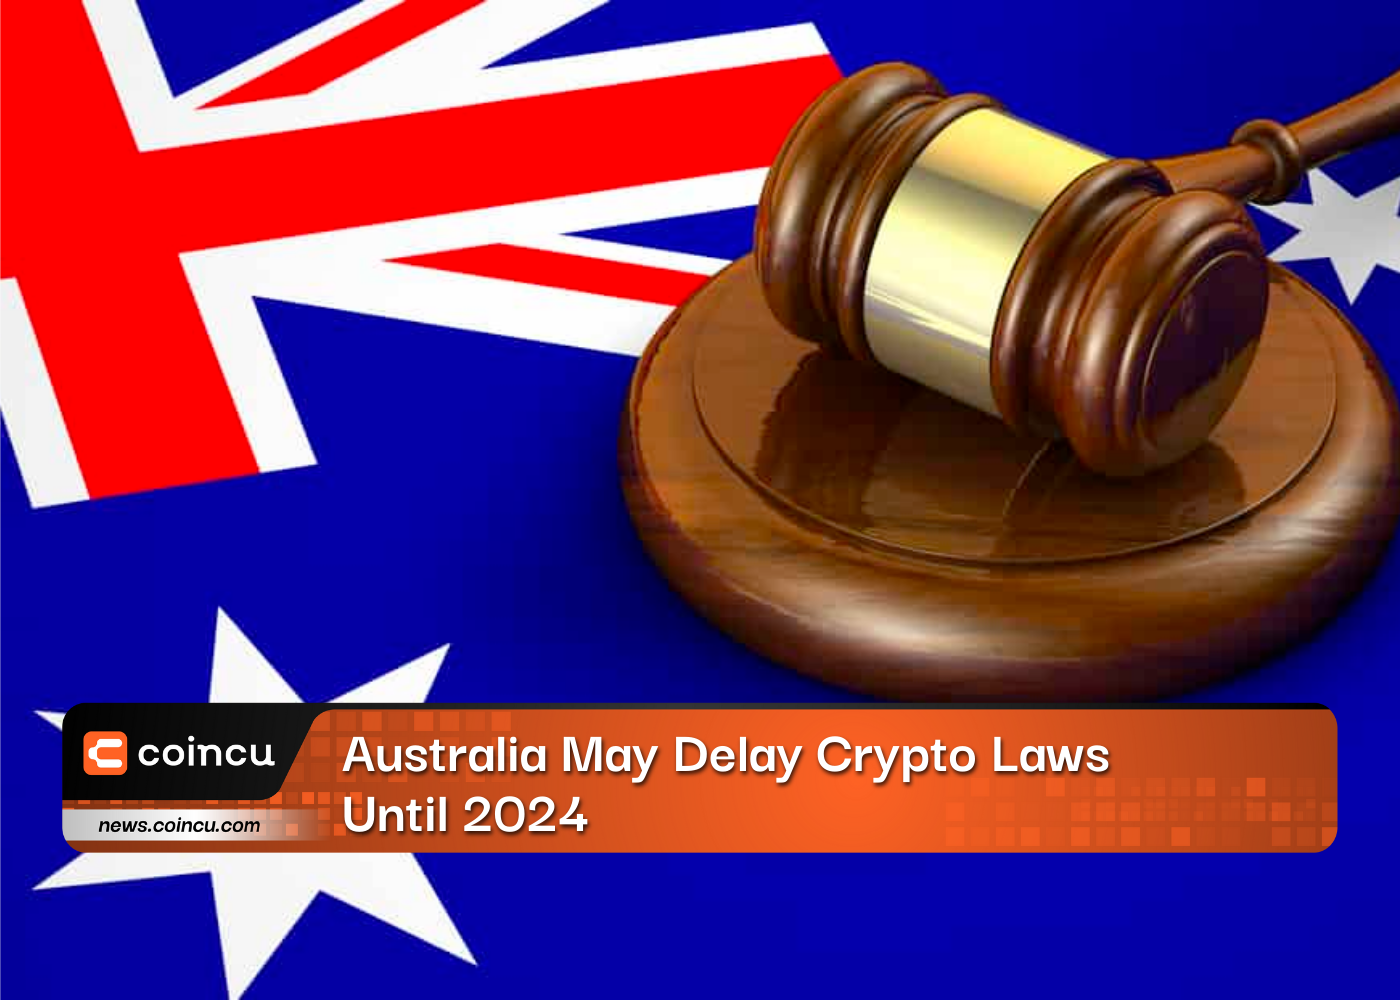 Australia May Delay Crypto Laws Until 2024